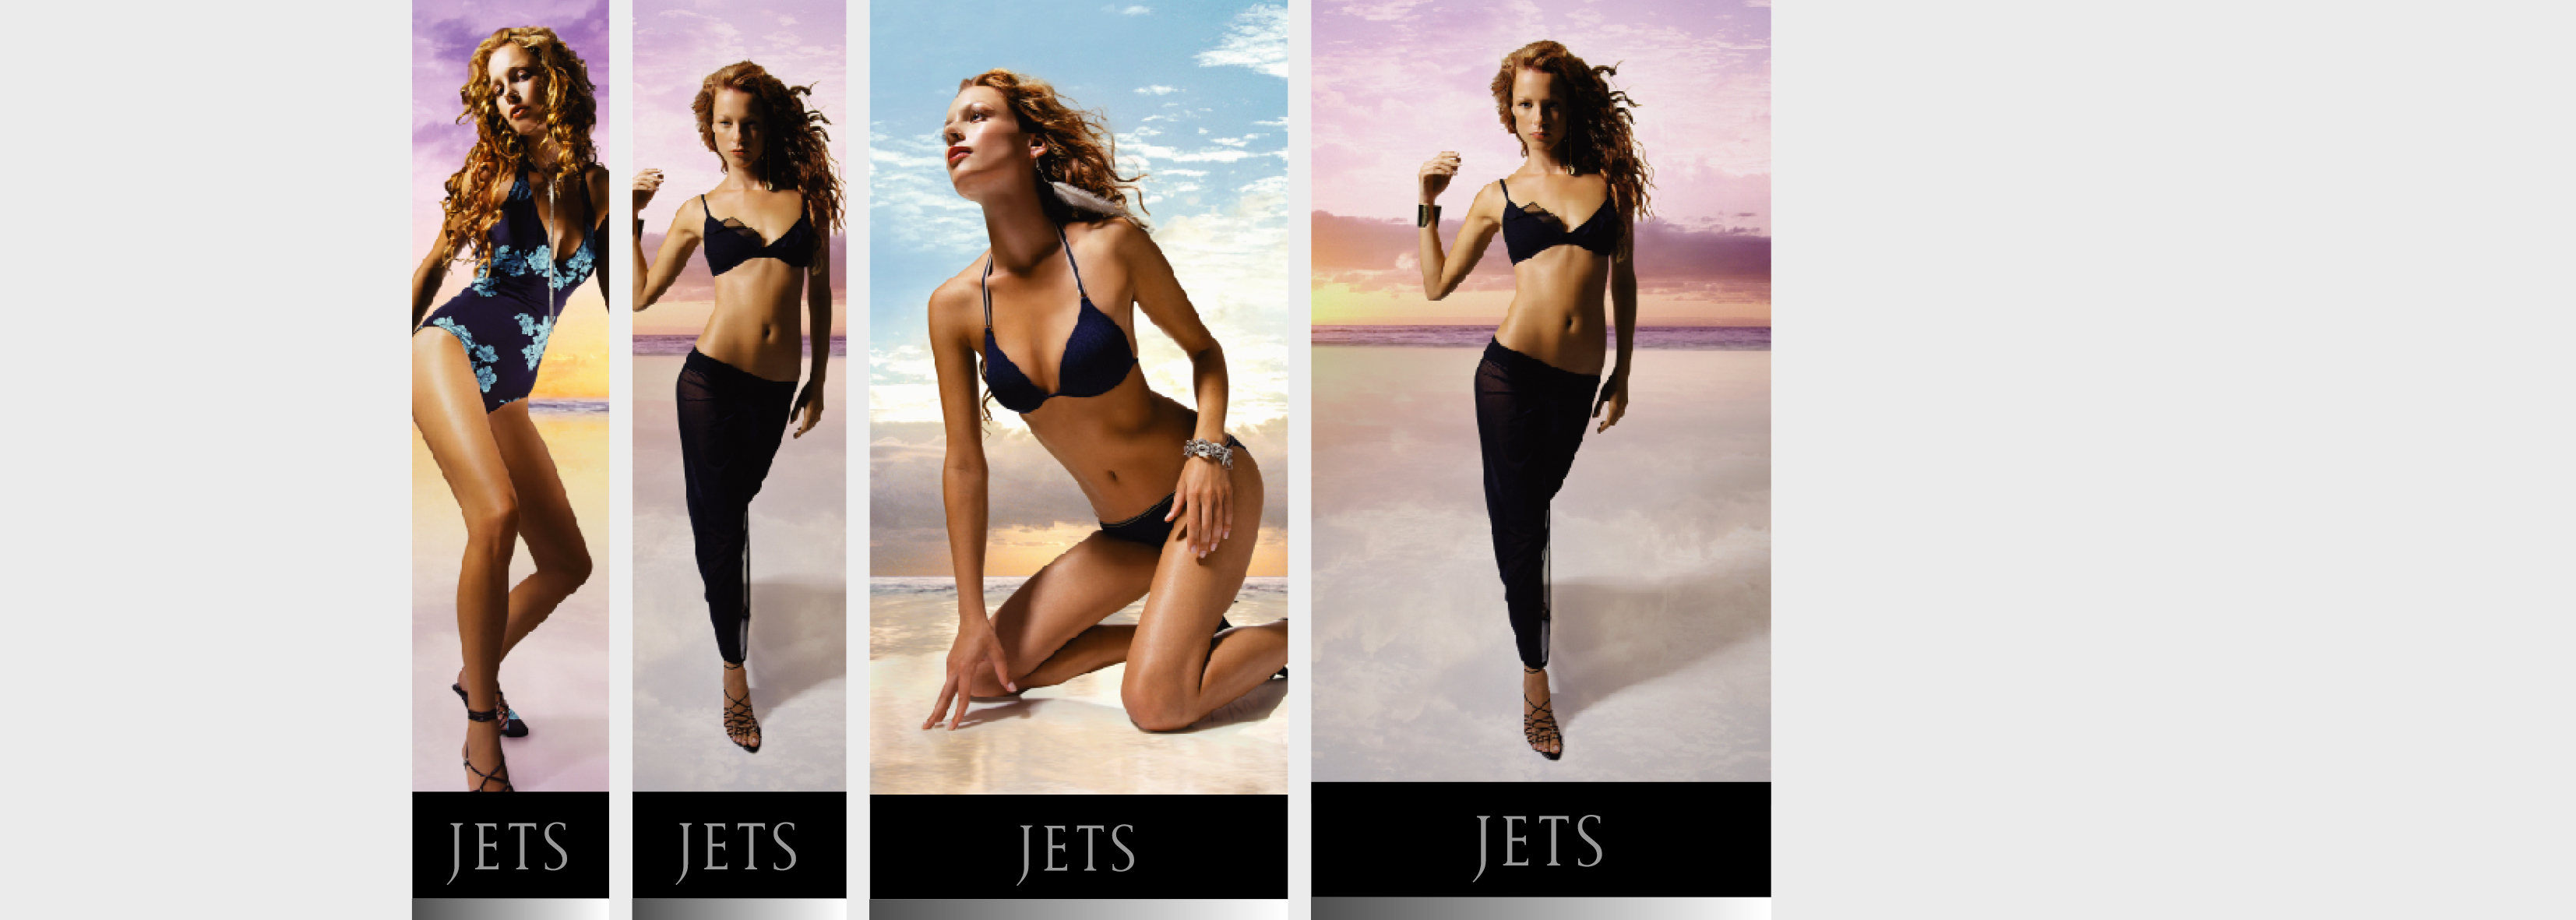 Jets Swimwear Goddess Campaign Black Label Posters